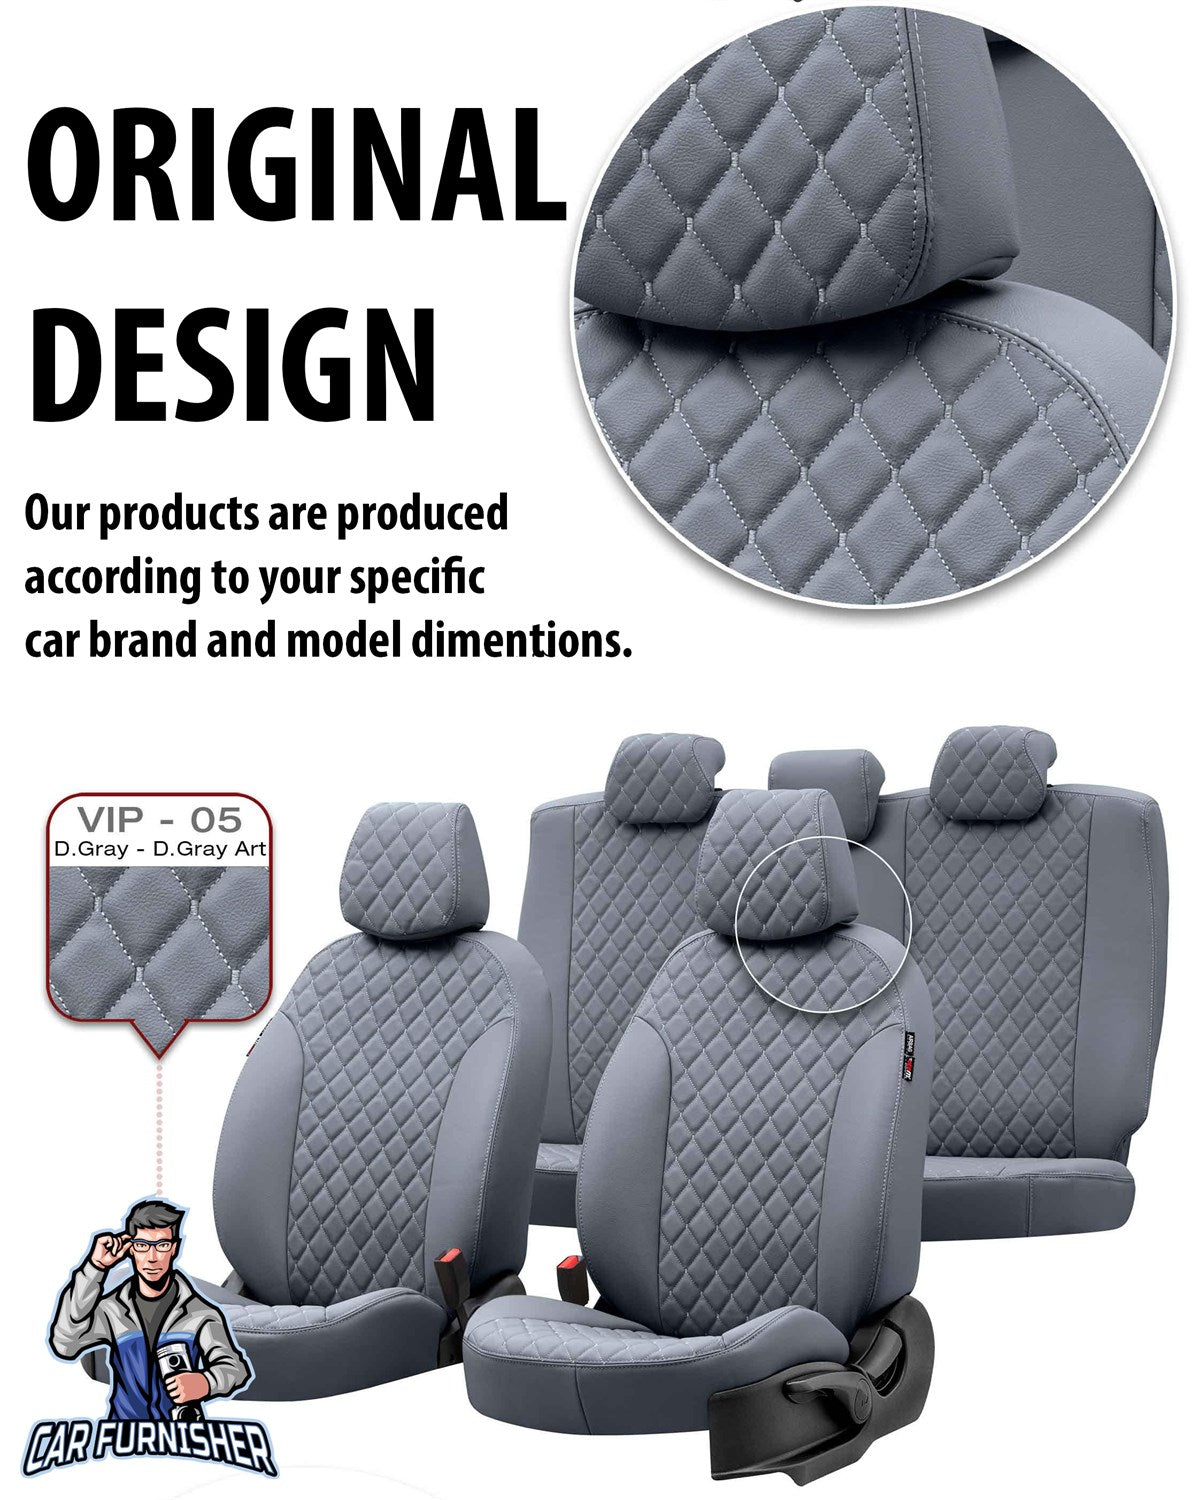 Mini Cooper Seat Covers Madrid Leather Design Blue Leather